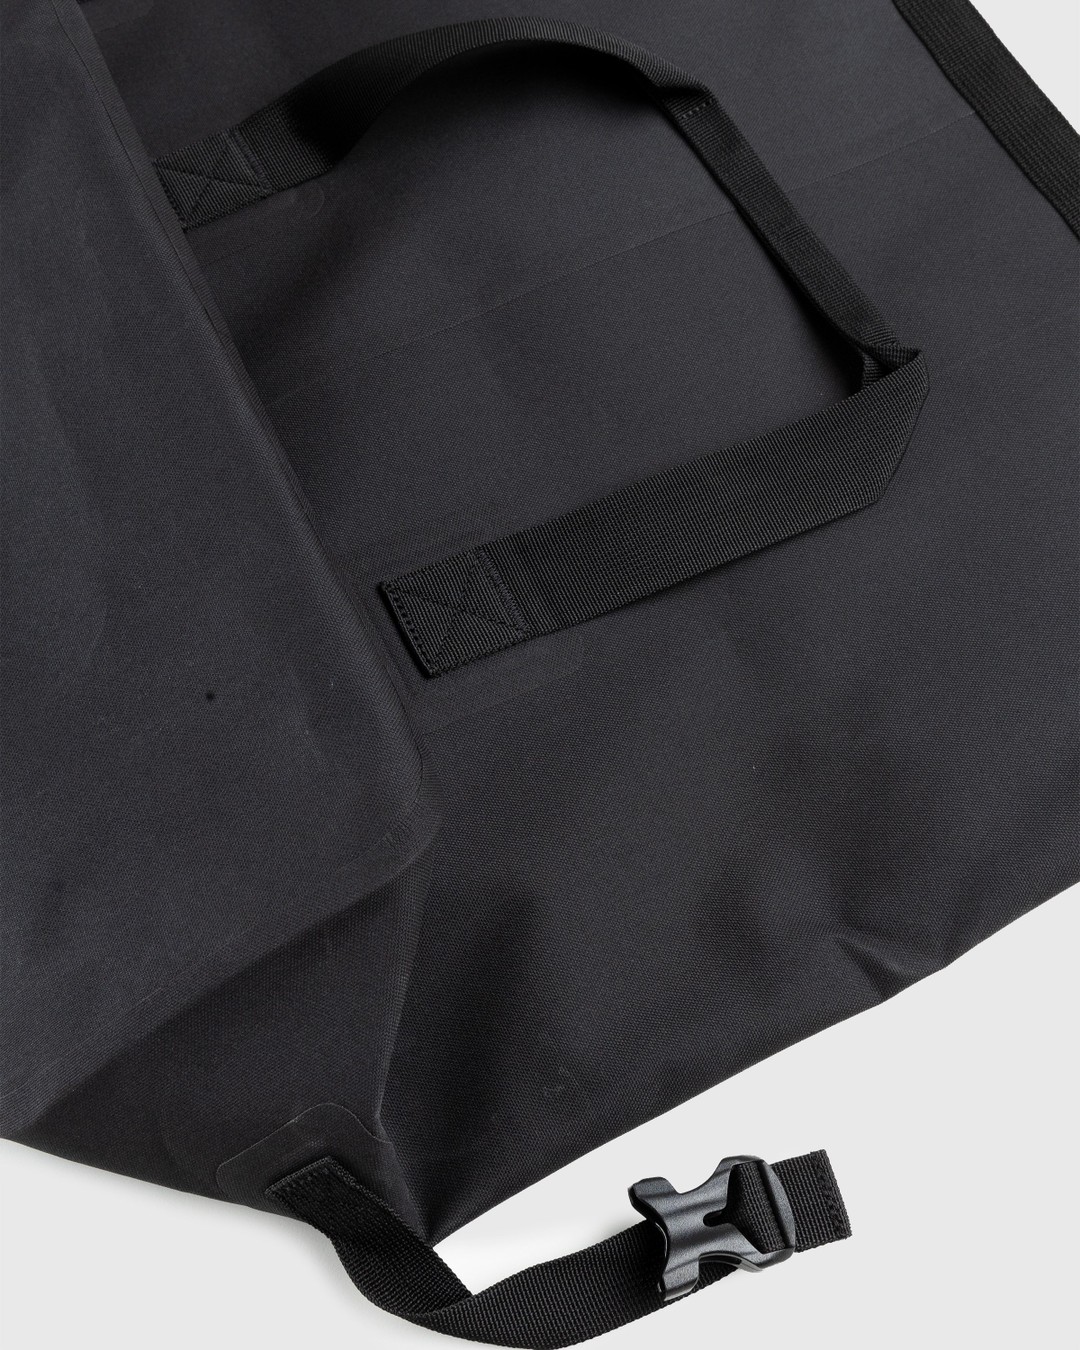 Snow Peak – Dry Boston Bag Black - Duffle & Top Handle Bags - Black - Image 4